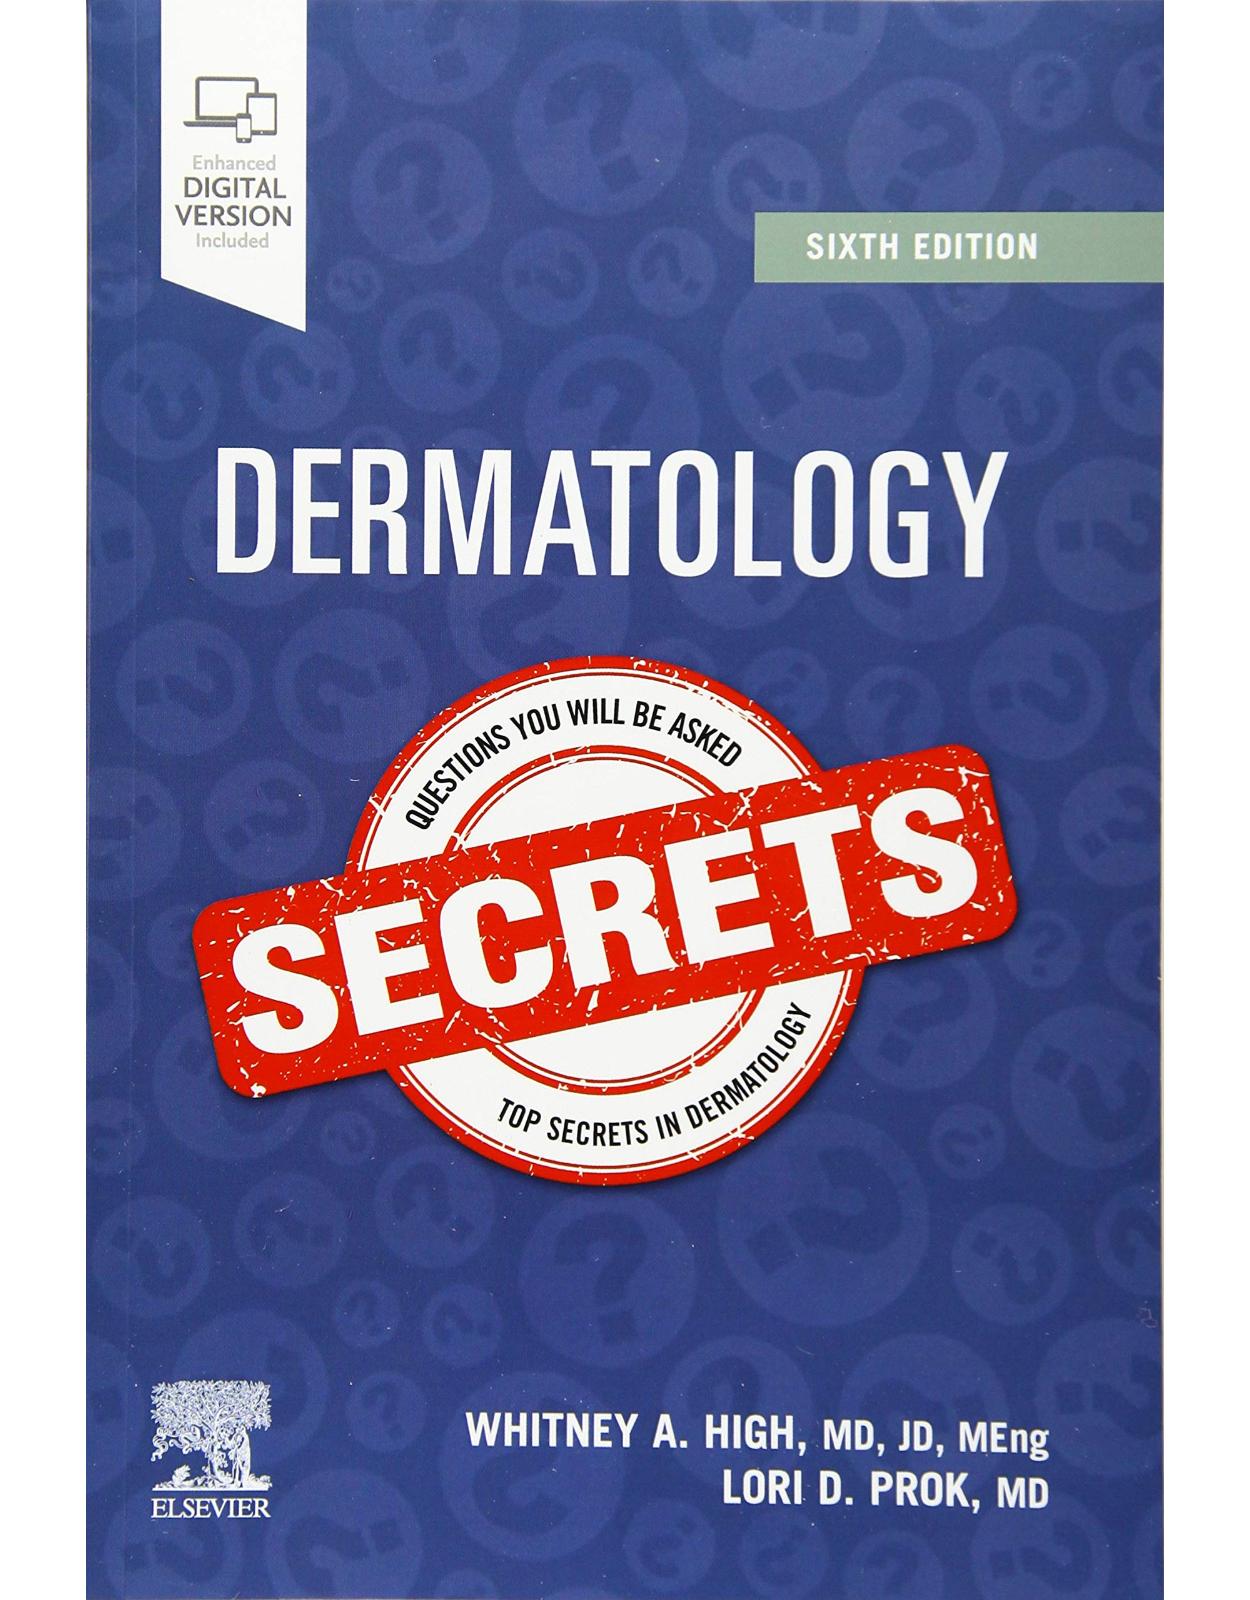 Dermatology Secrets